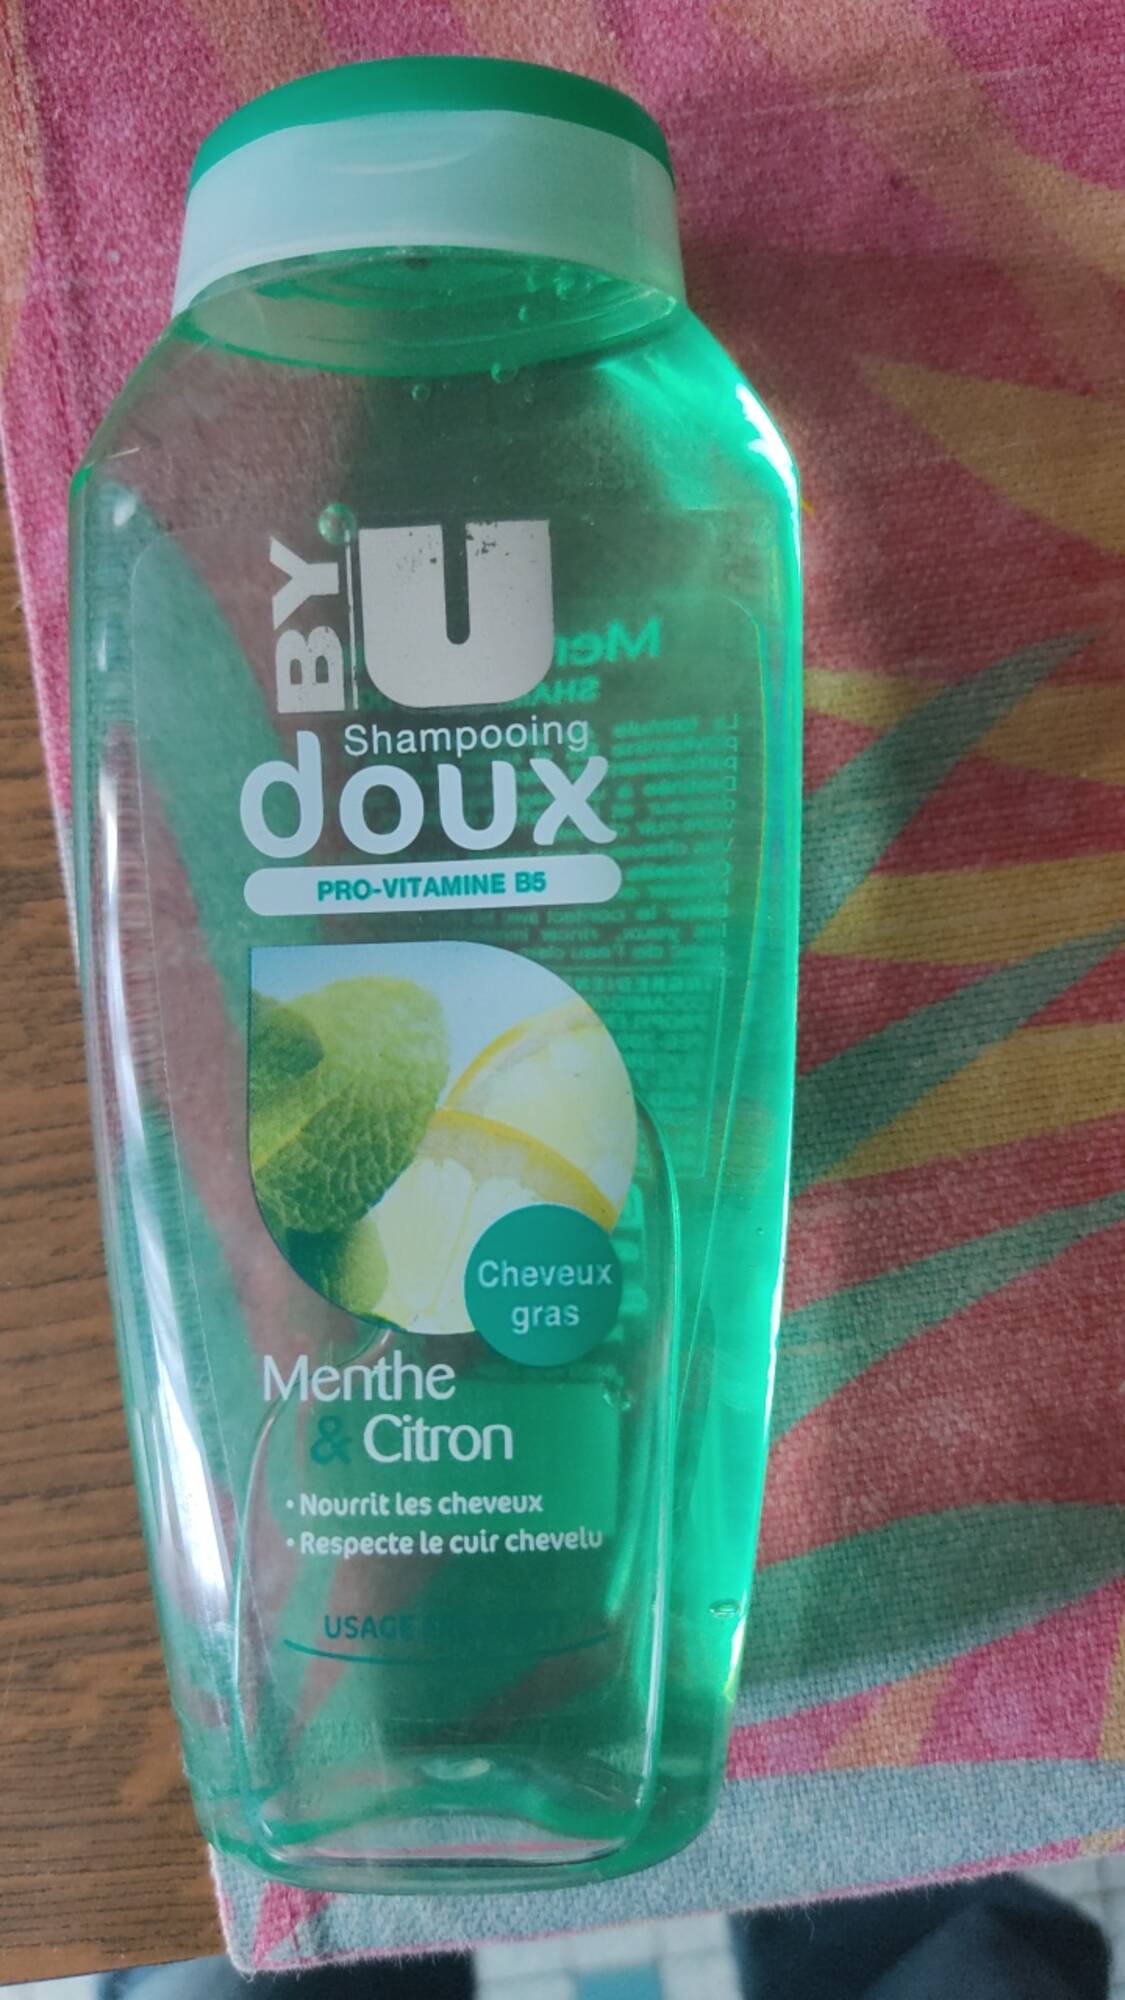 BY U - Menthe & citron - Shampooing doux